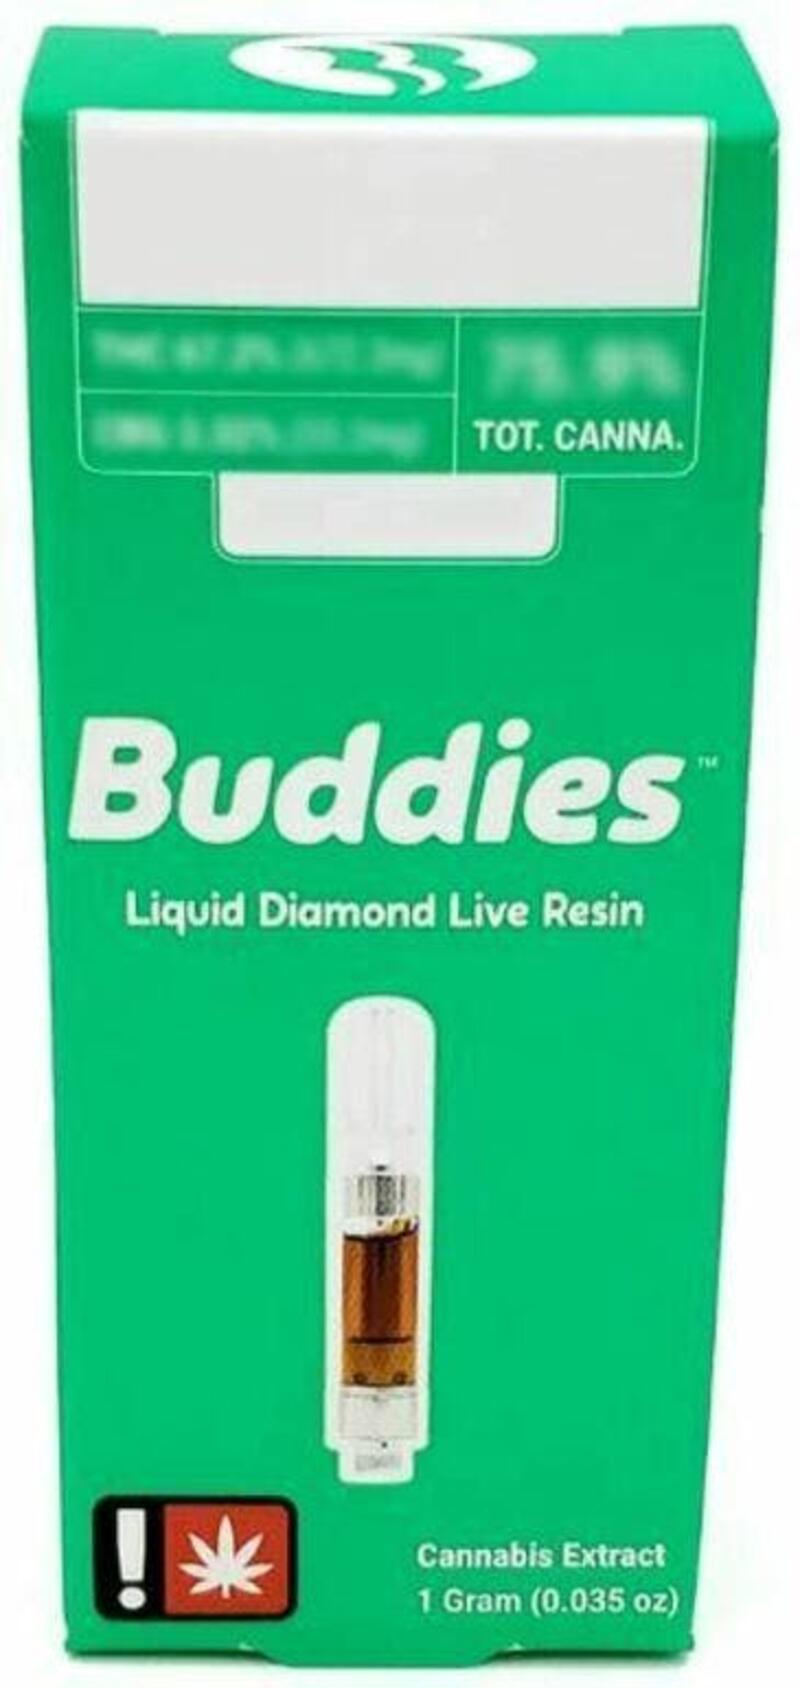 Buddies Liquid Diamonds Live Resin Cart 1g (I) Brr Berry